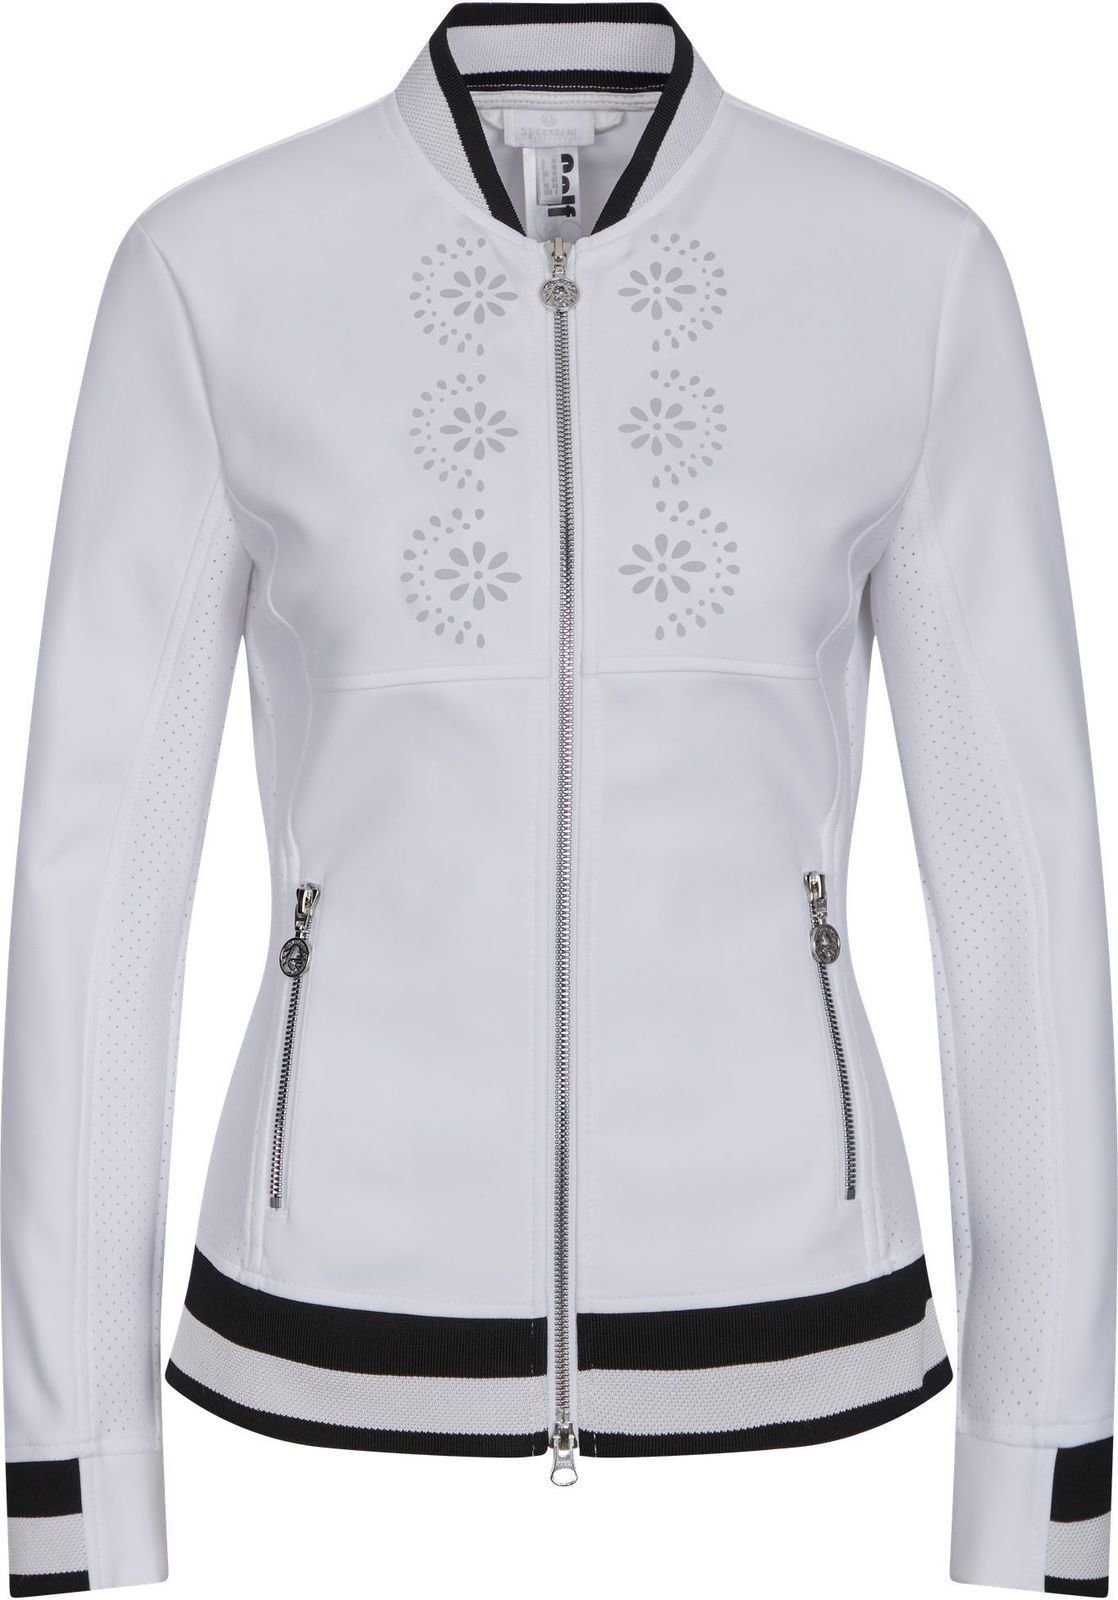 Jacket Sportalm Beauty Womens Jacket Optical White 34